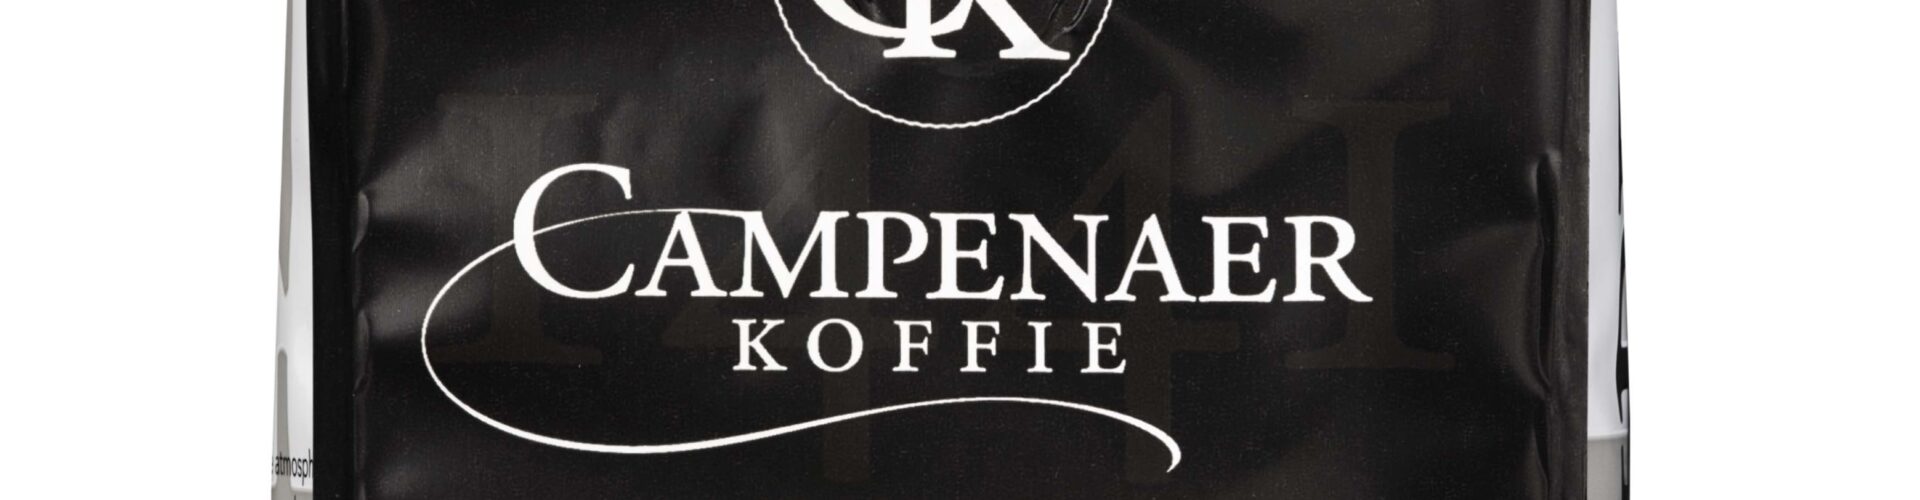 Campenaer Koffie no. 111